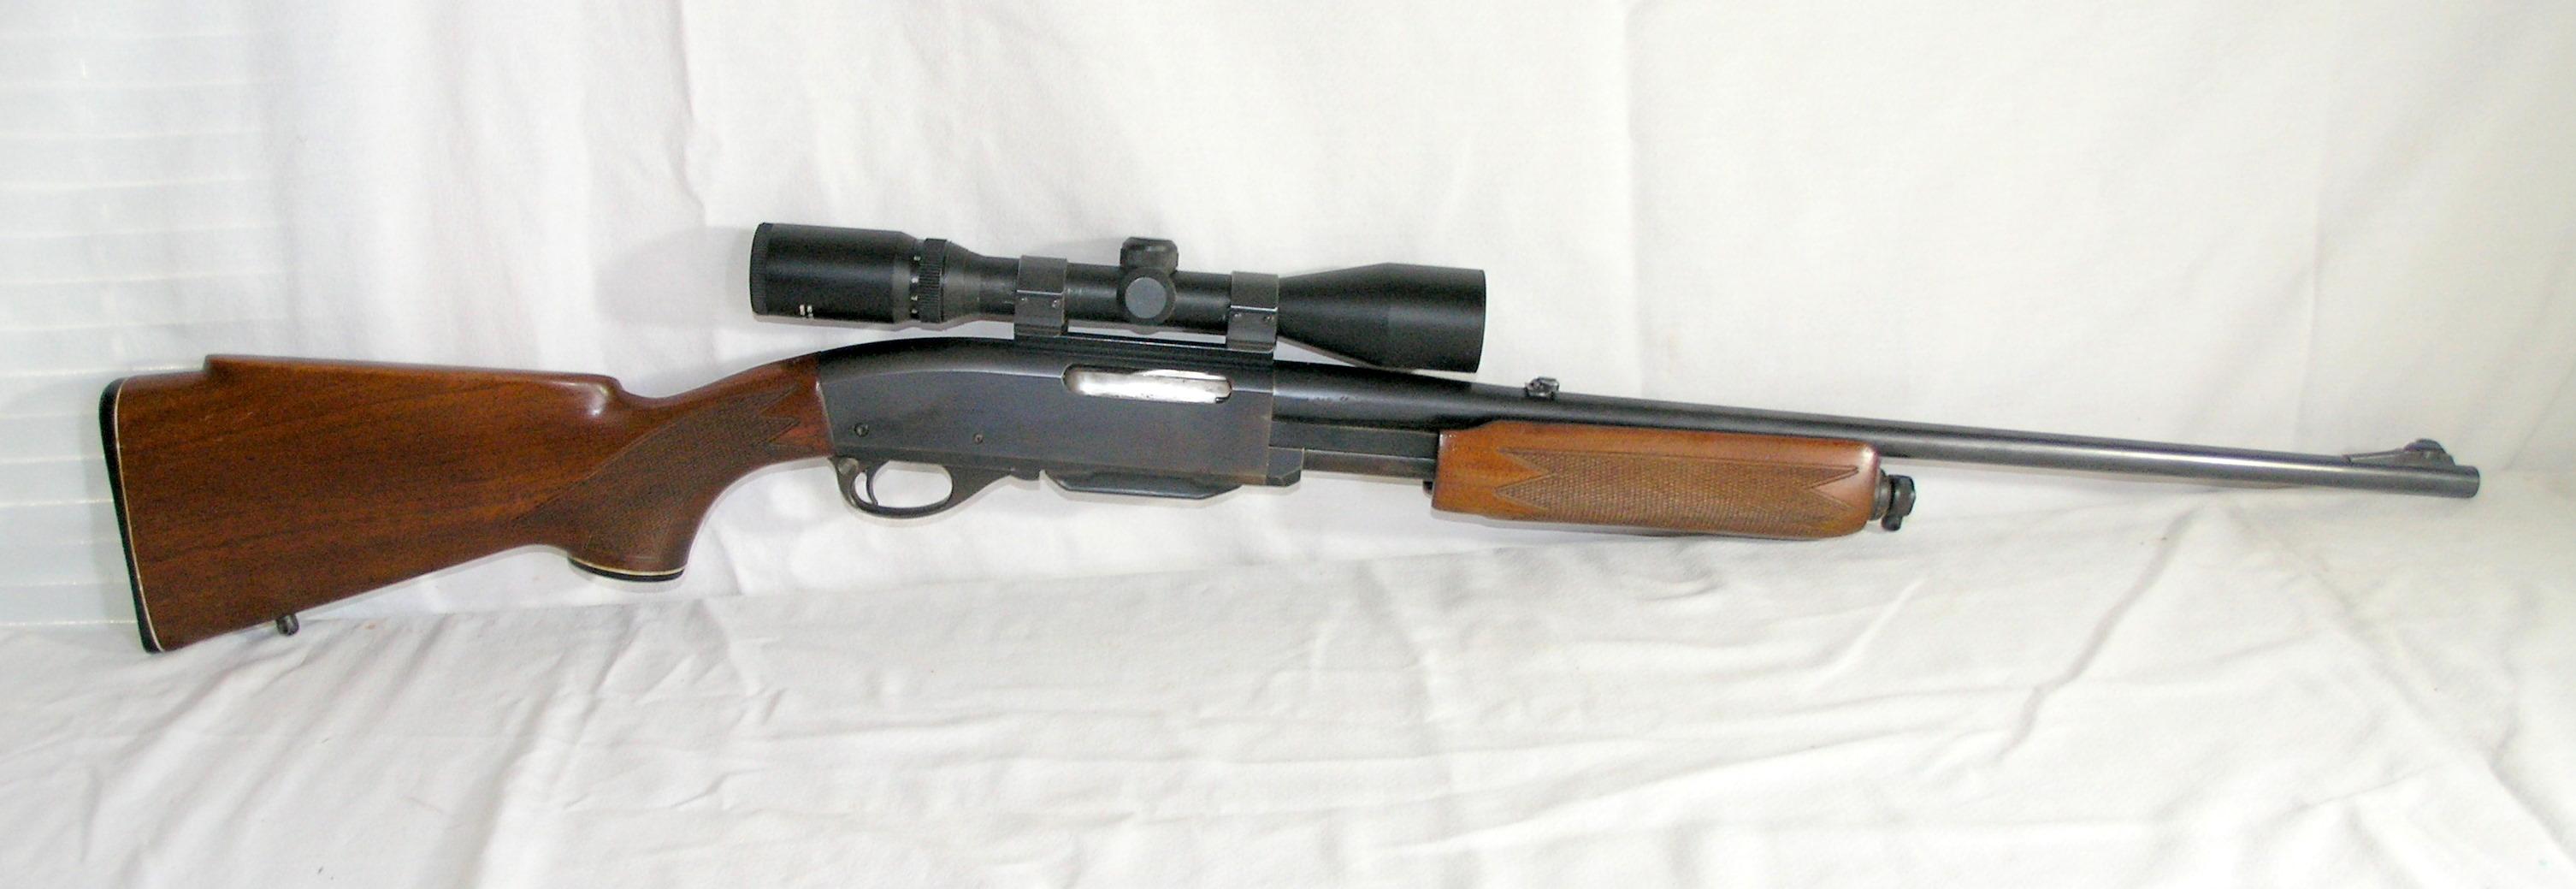 Remington Model-760 30-06 with Scope. Estimated Value: $800-1200